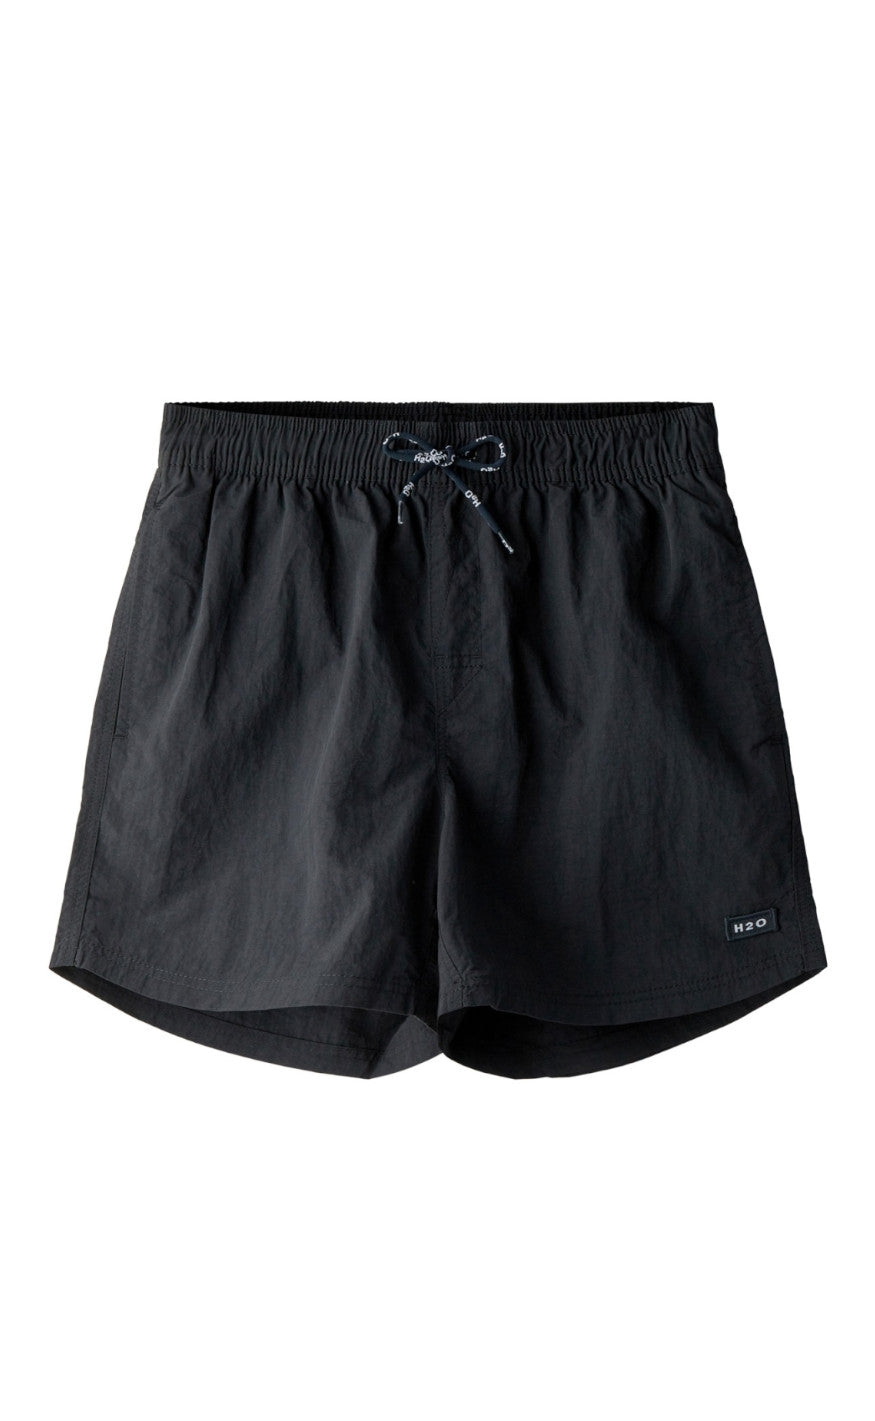 #3 - H2O Shorts - Leisure - Black